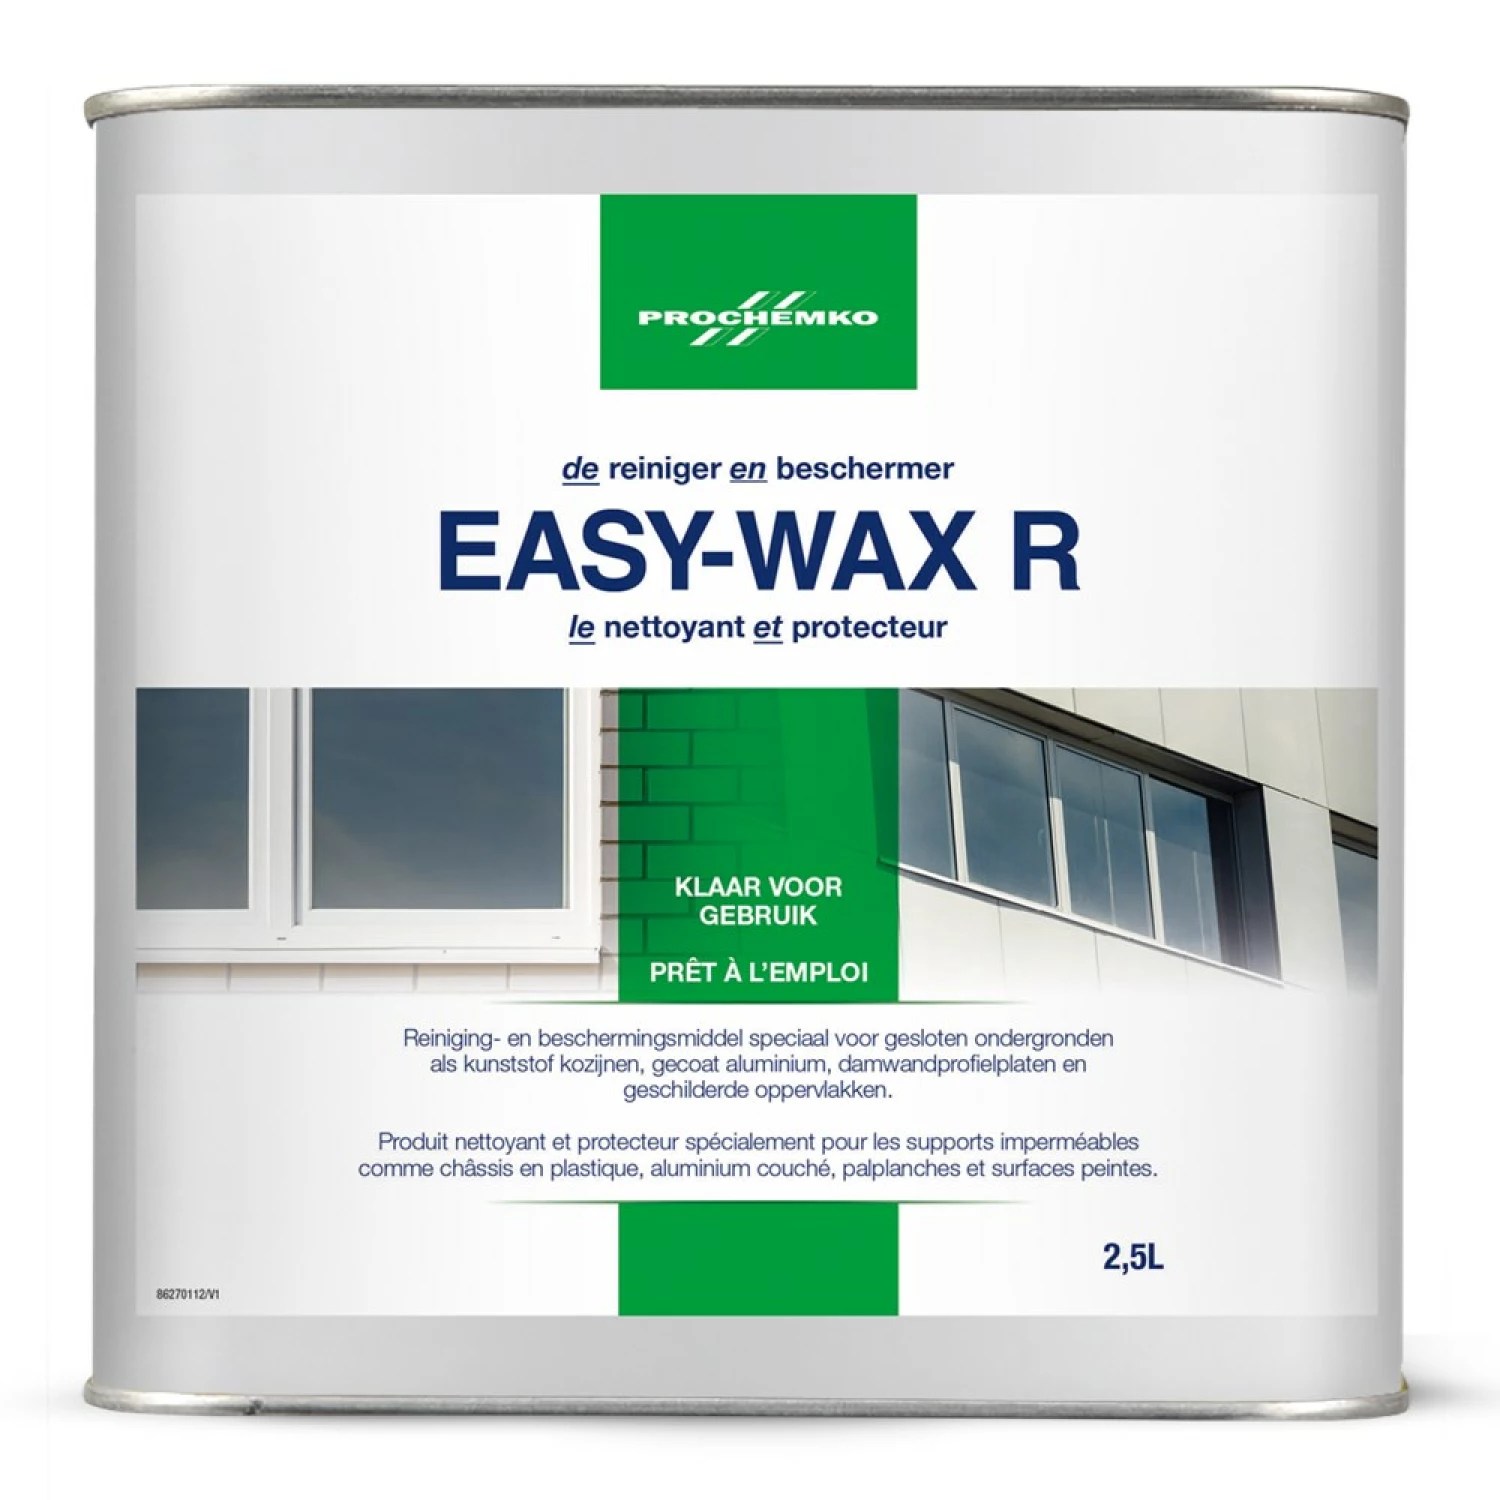 Prochemko Easy-Wax R-image